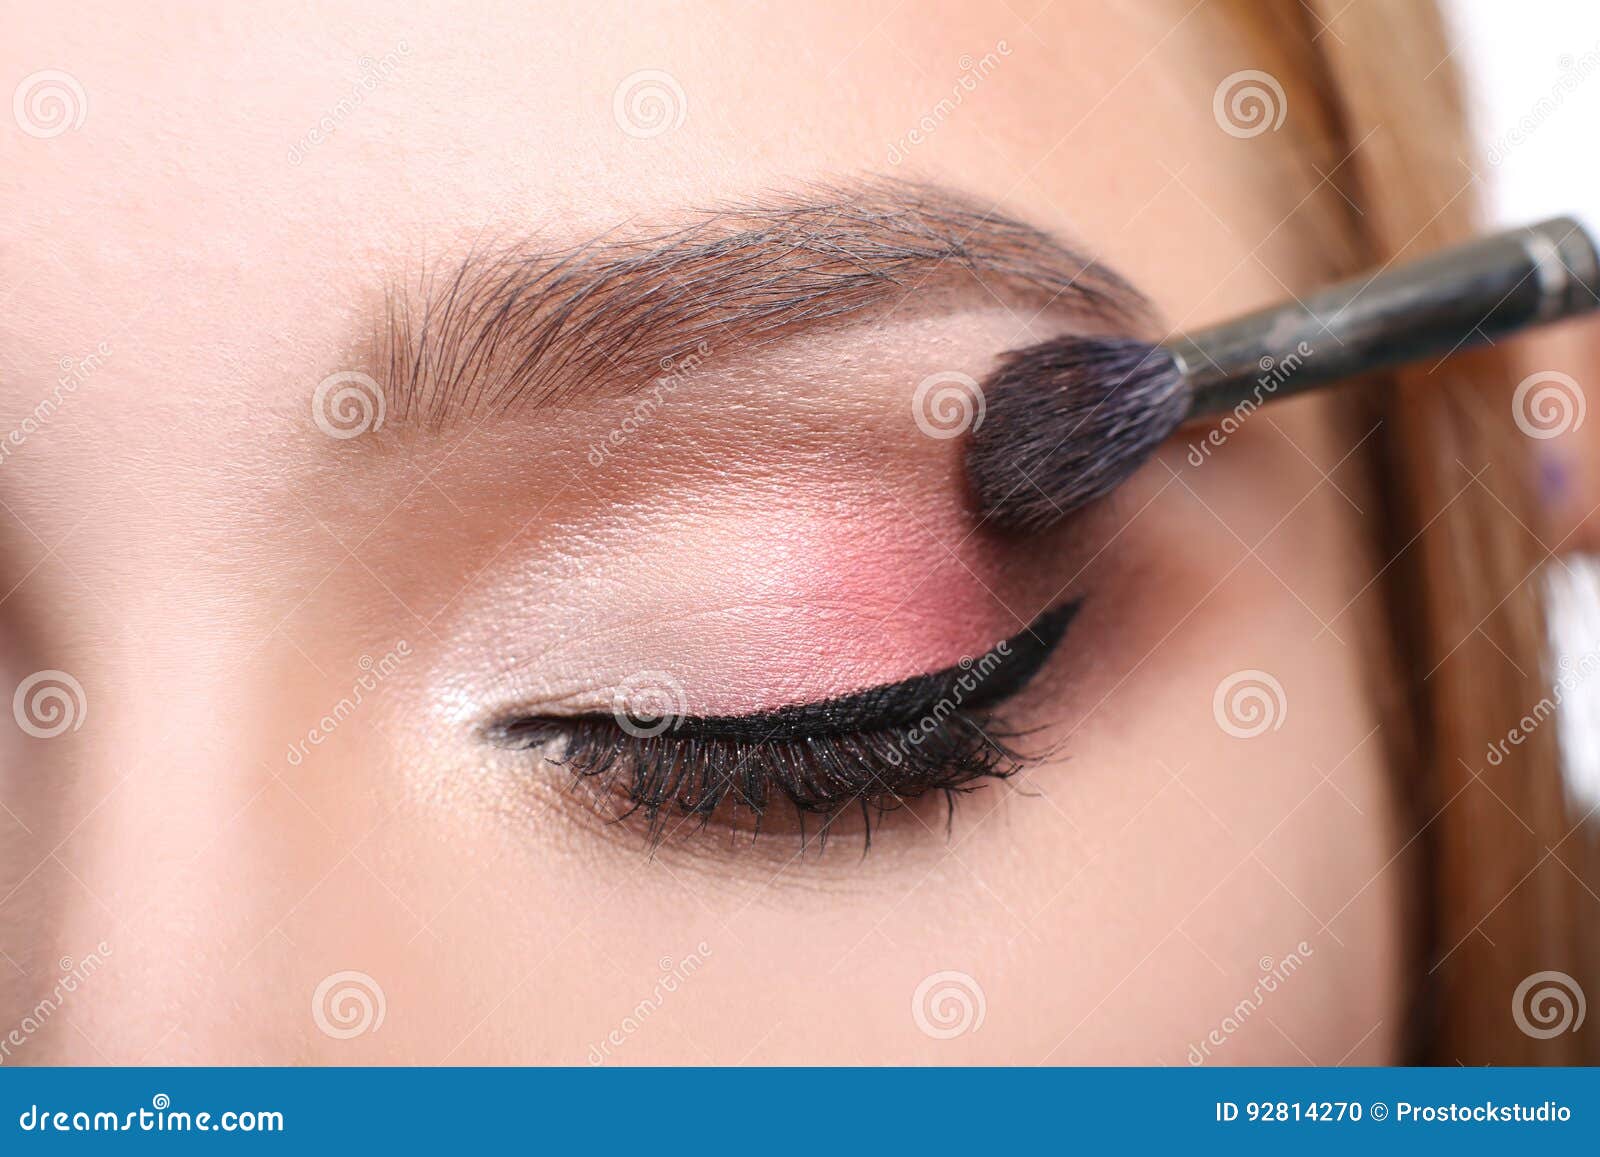 make-up artist apply eyeshadow with brush, beauty